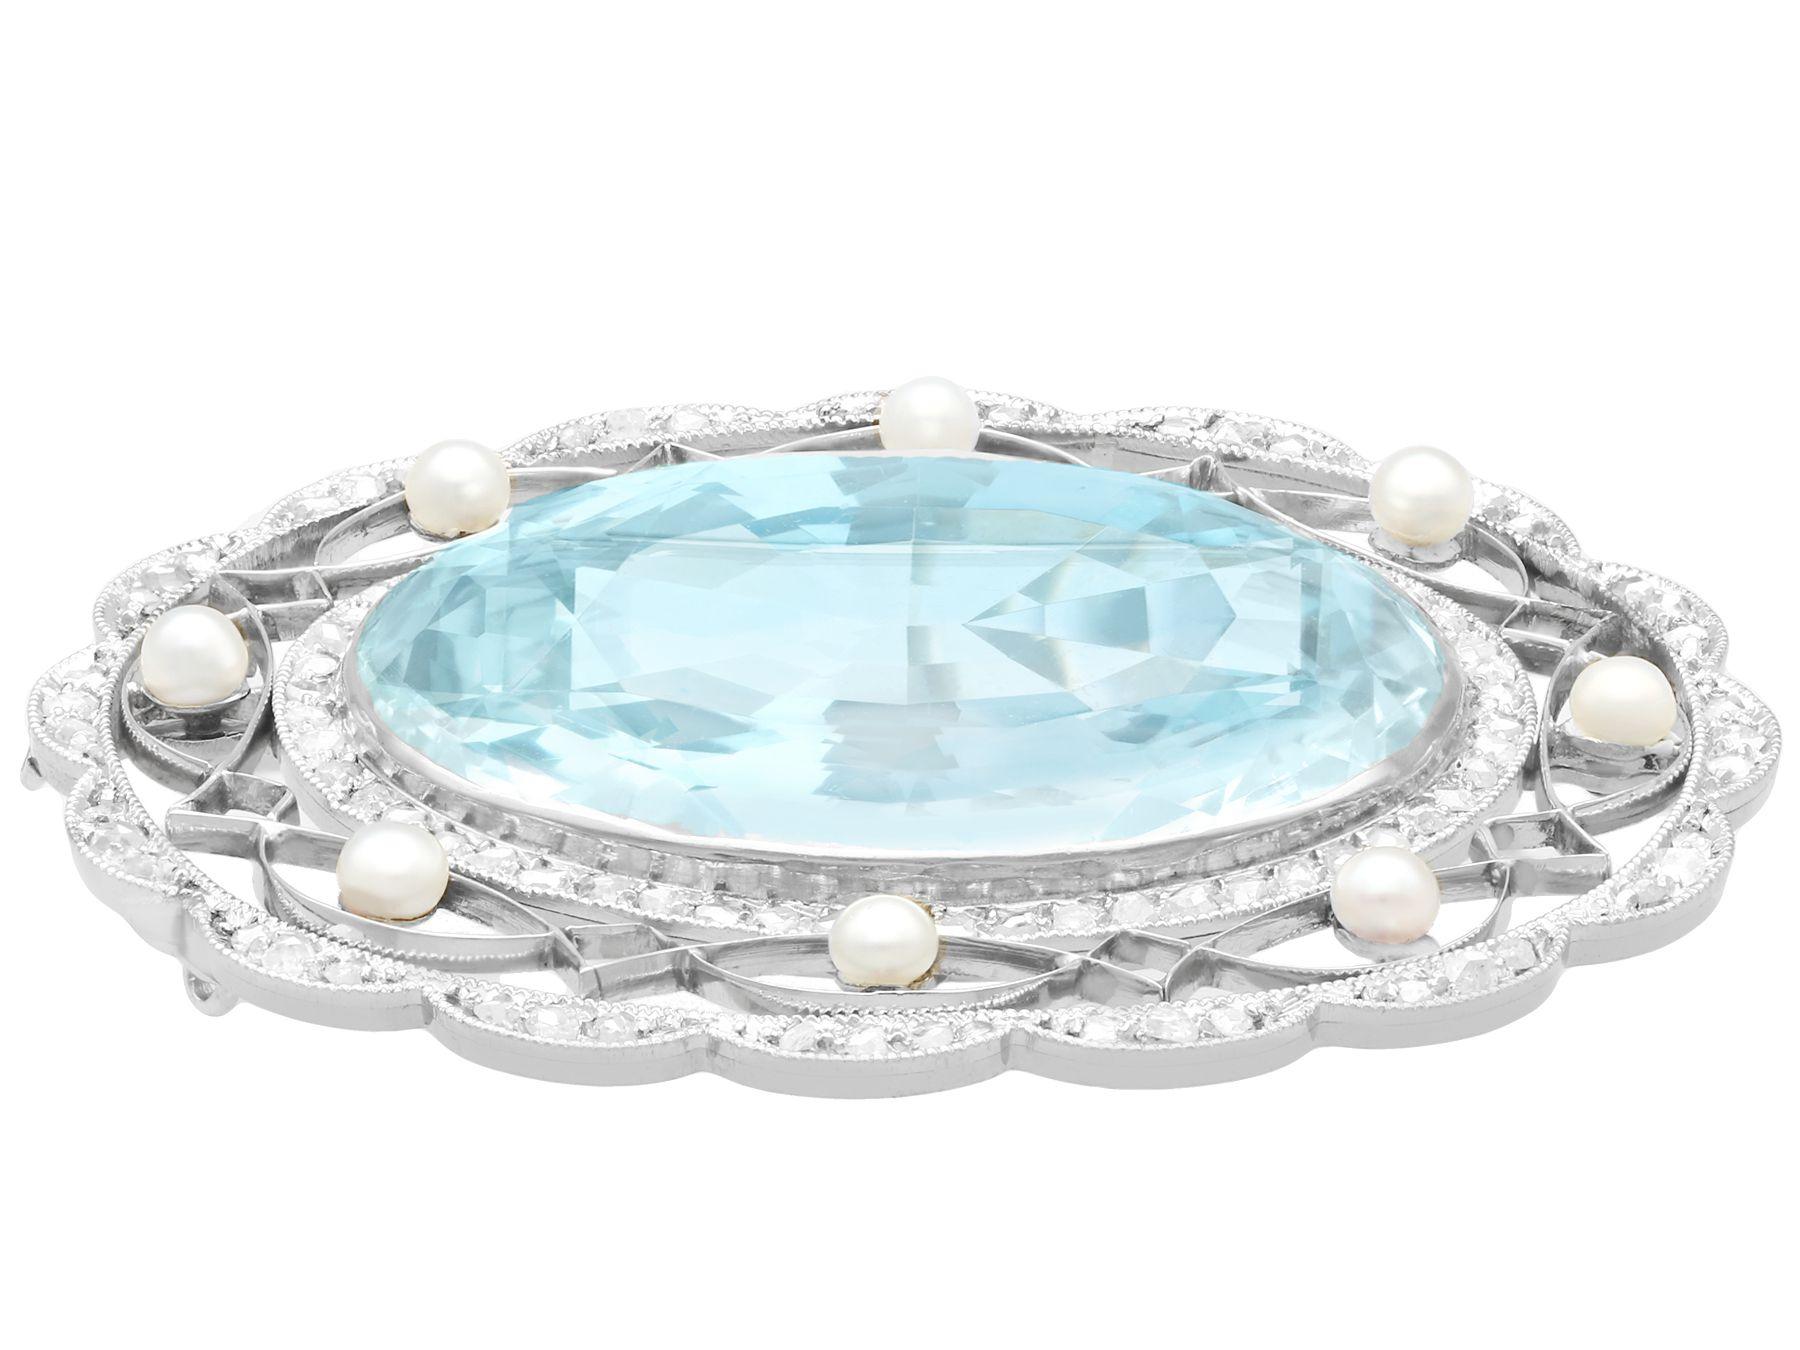 Oval Cut Edwardian 43.84 Carat Aquamarine Diamond and Pearl Brooch in Platinum For Sale